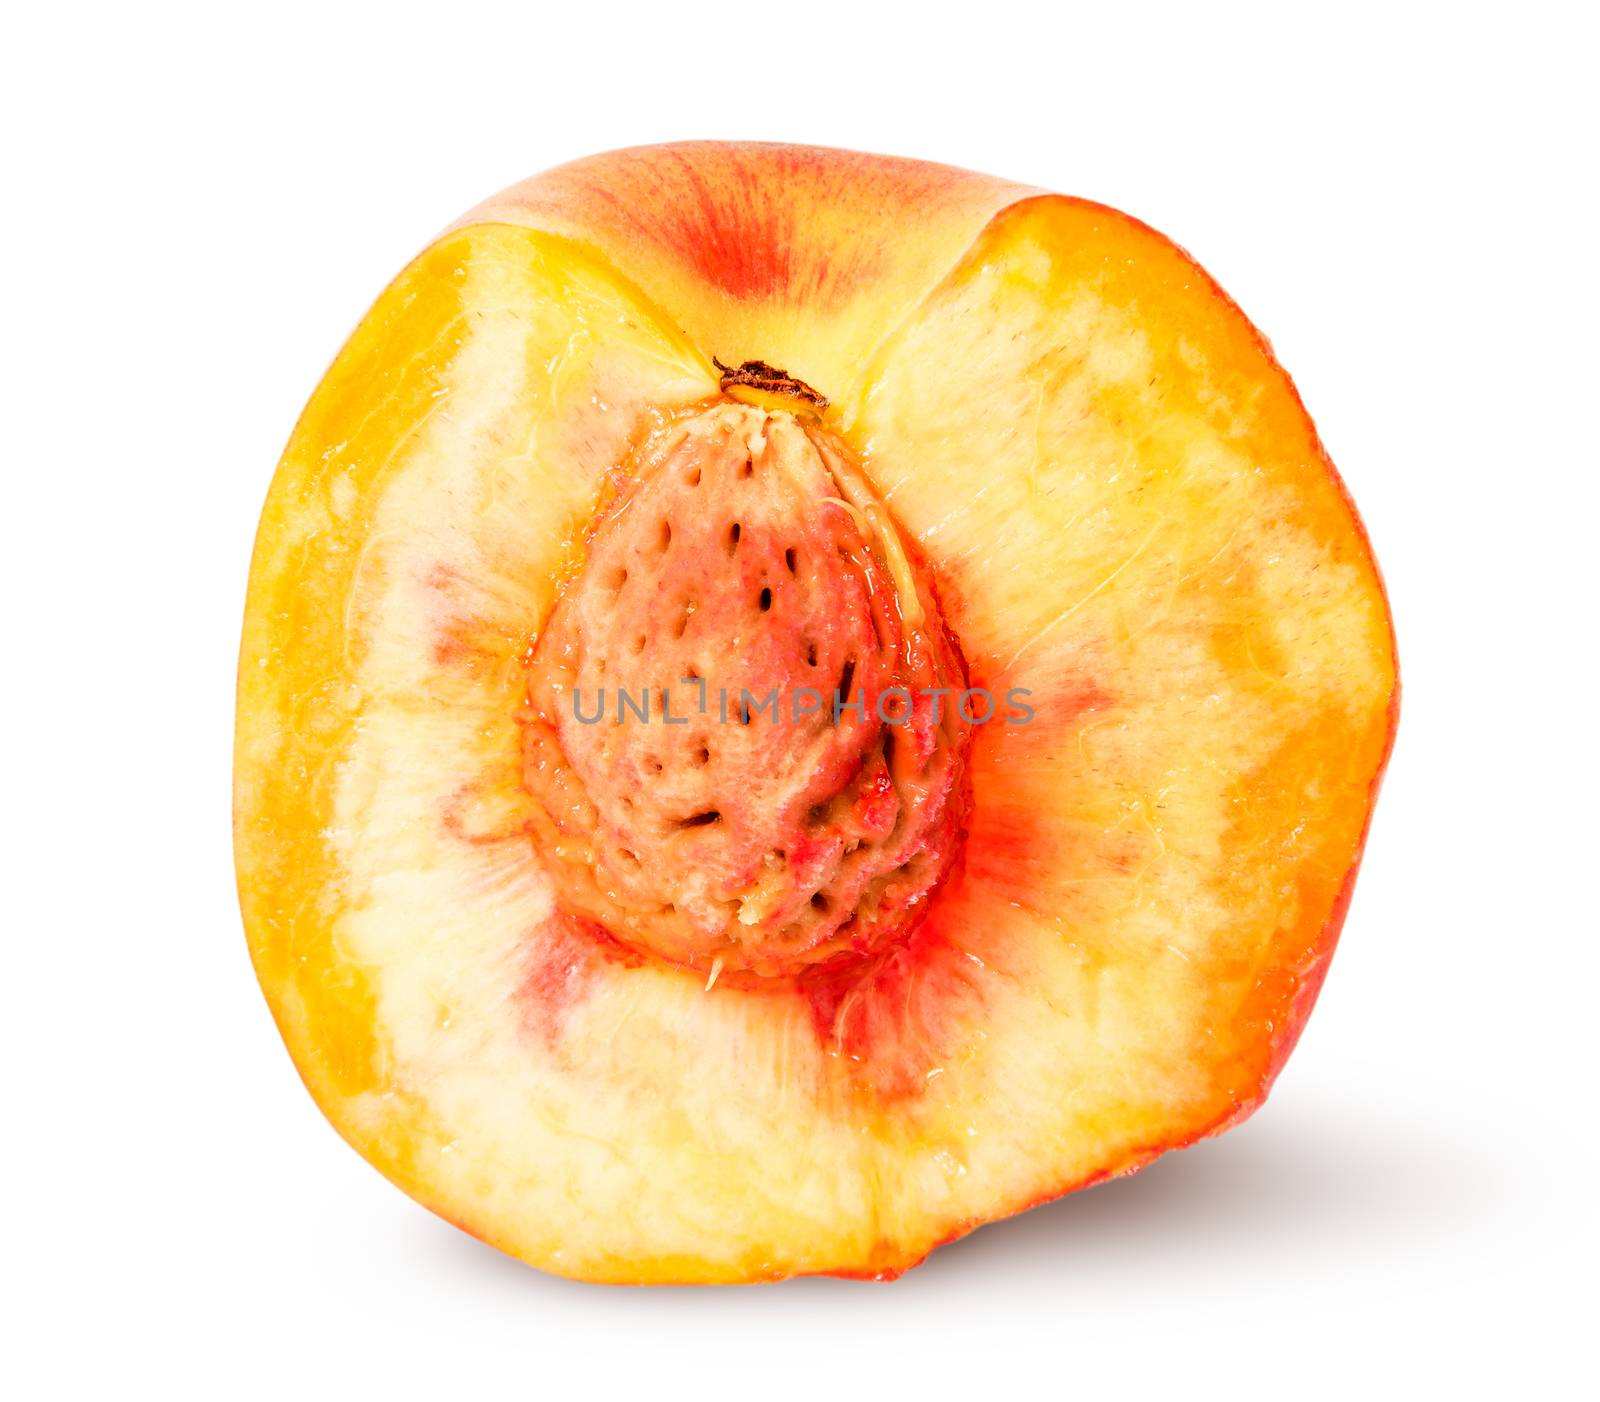 Juicy ripe half of peach by Cipariss